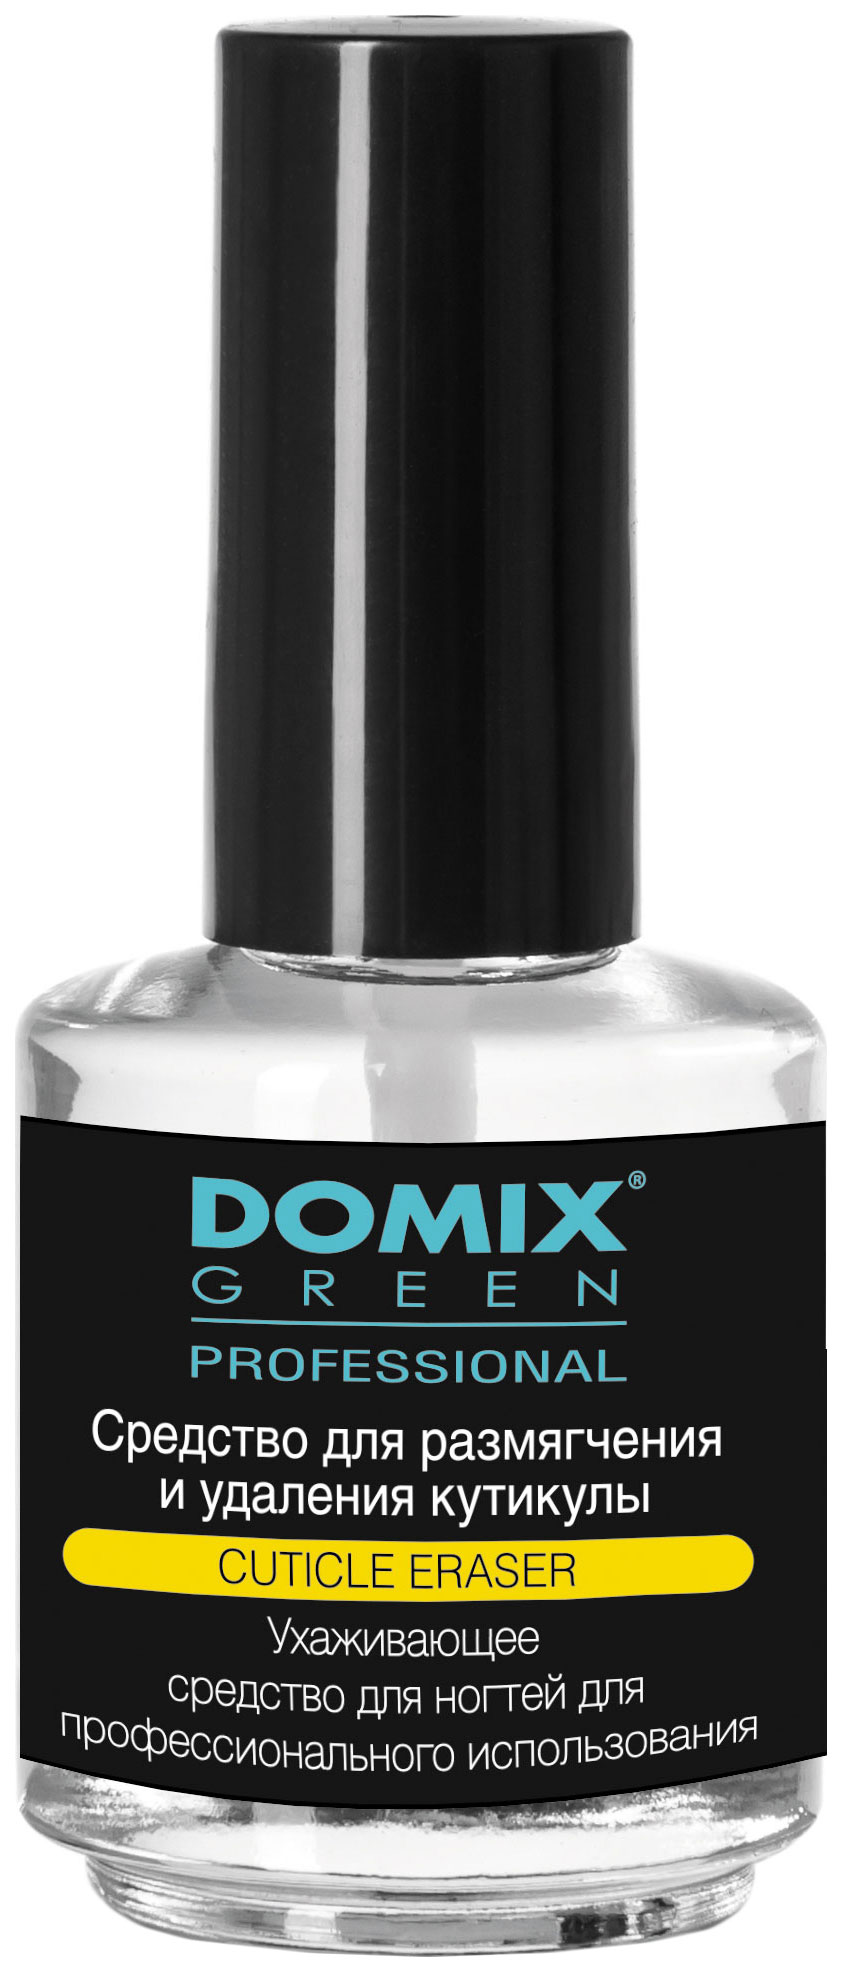 Средство для удаления кутикулы Domix Green Professional Cuticle Eraser 17 мл